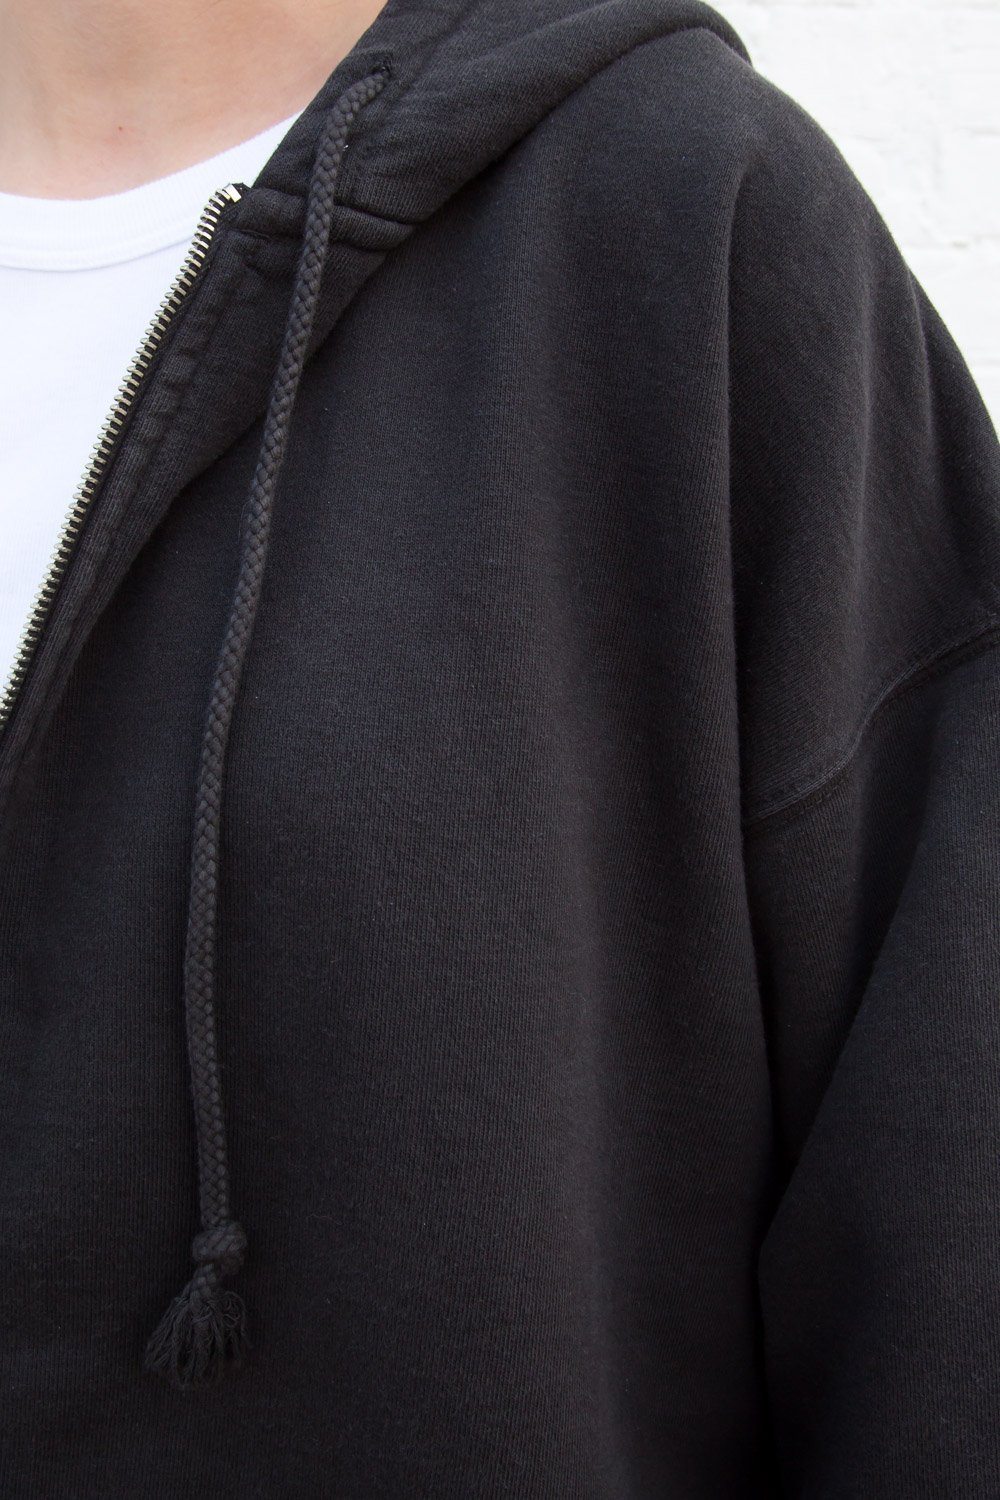 Brandy Melville Solid Black Zip Up Hoodie One Size - 50% off